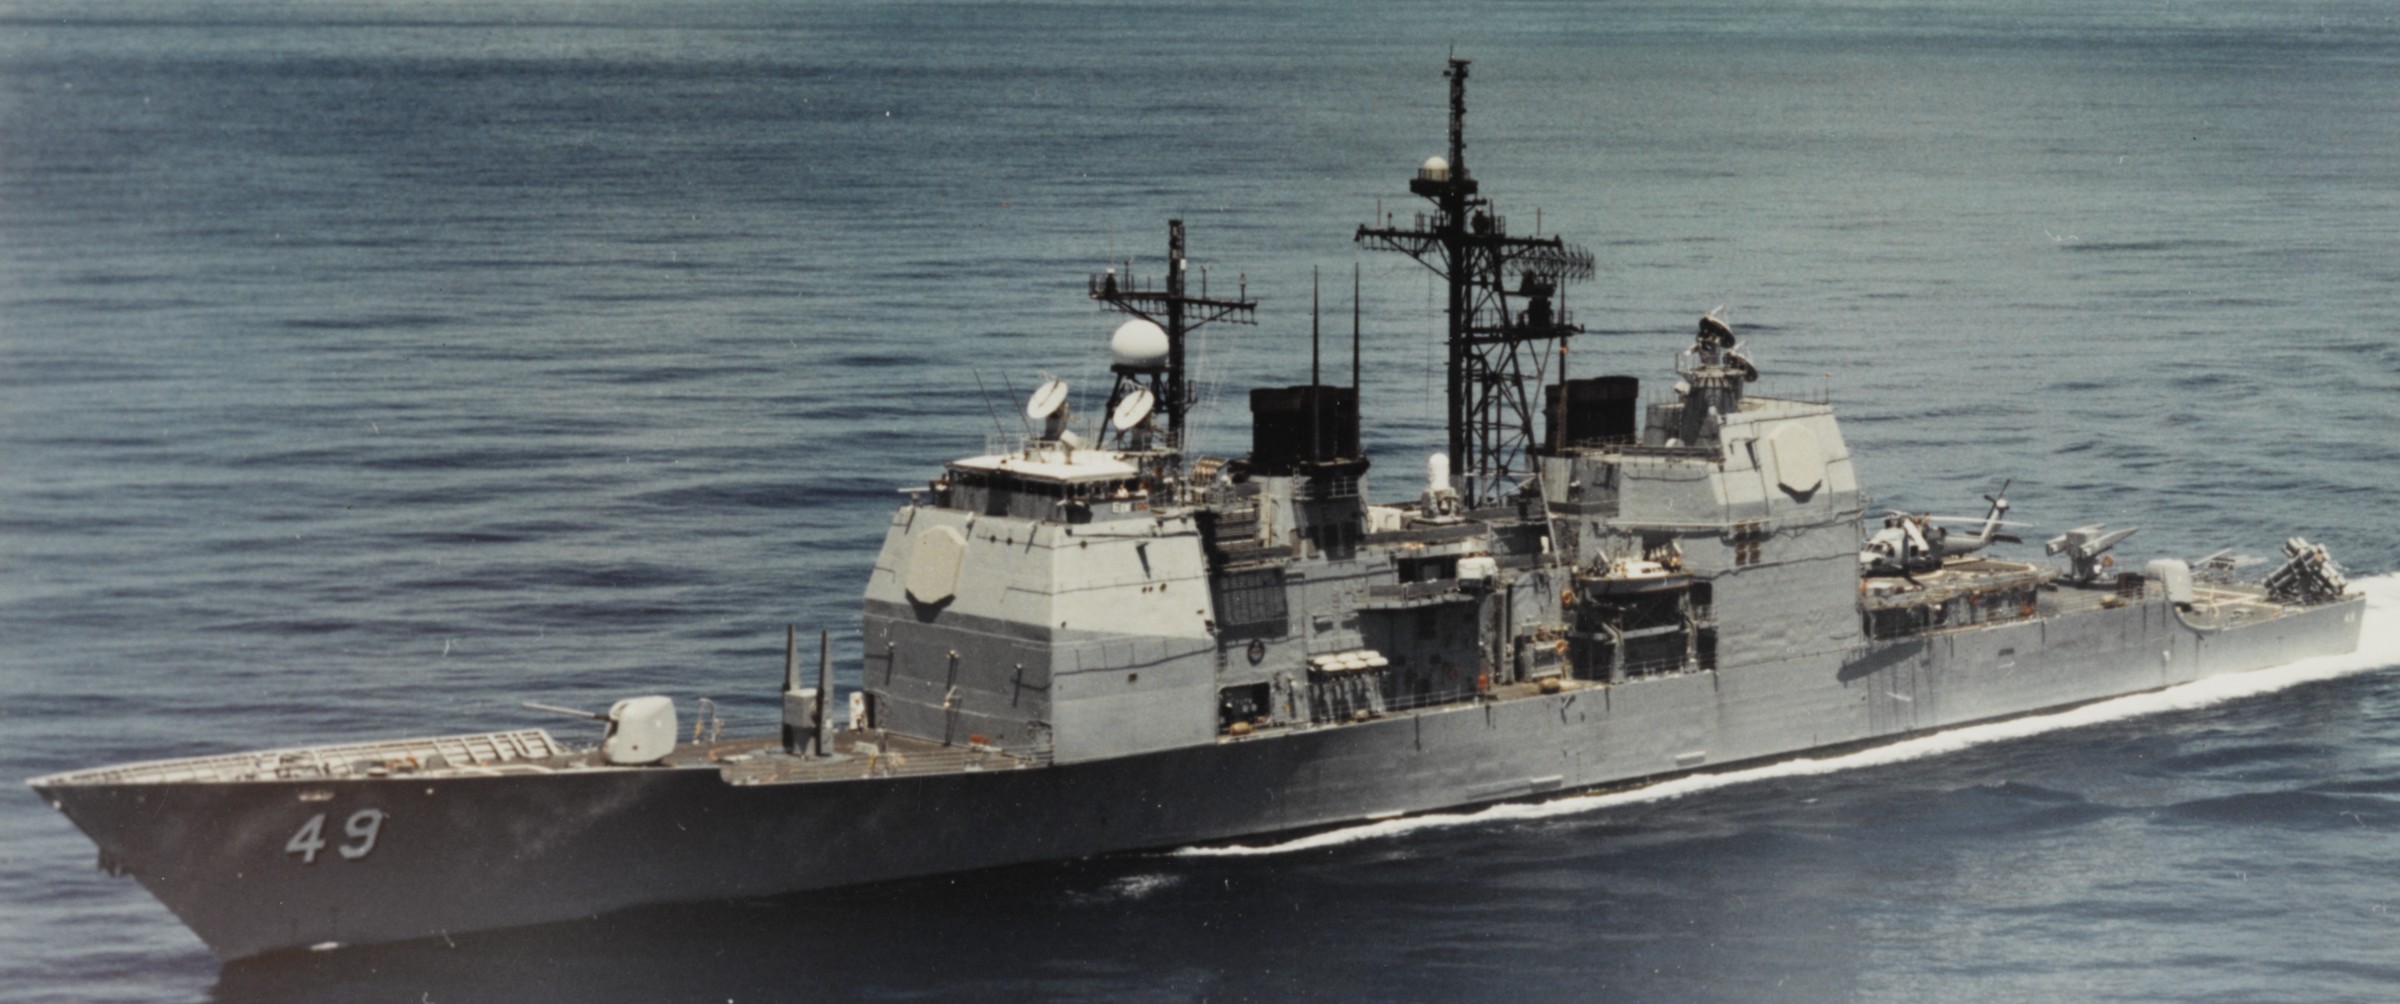 cg-49 uss vincennes ticonderoga class guided missile cruiser aegis us navy 51